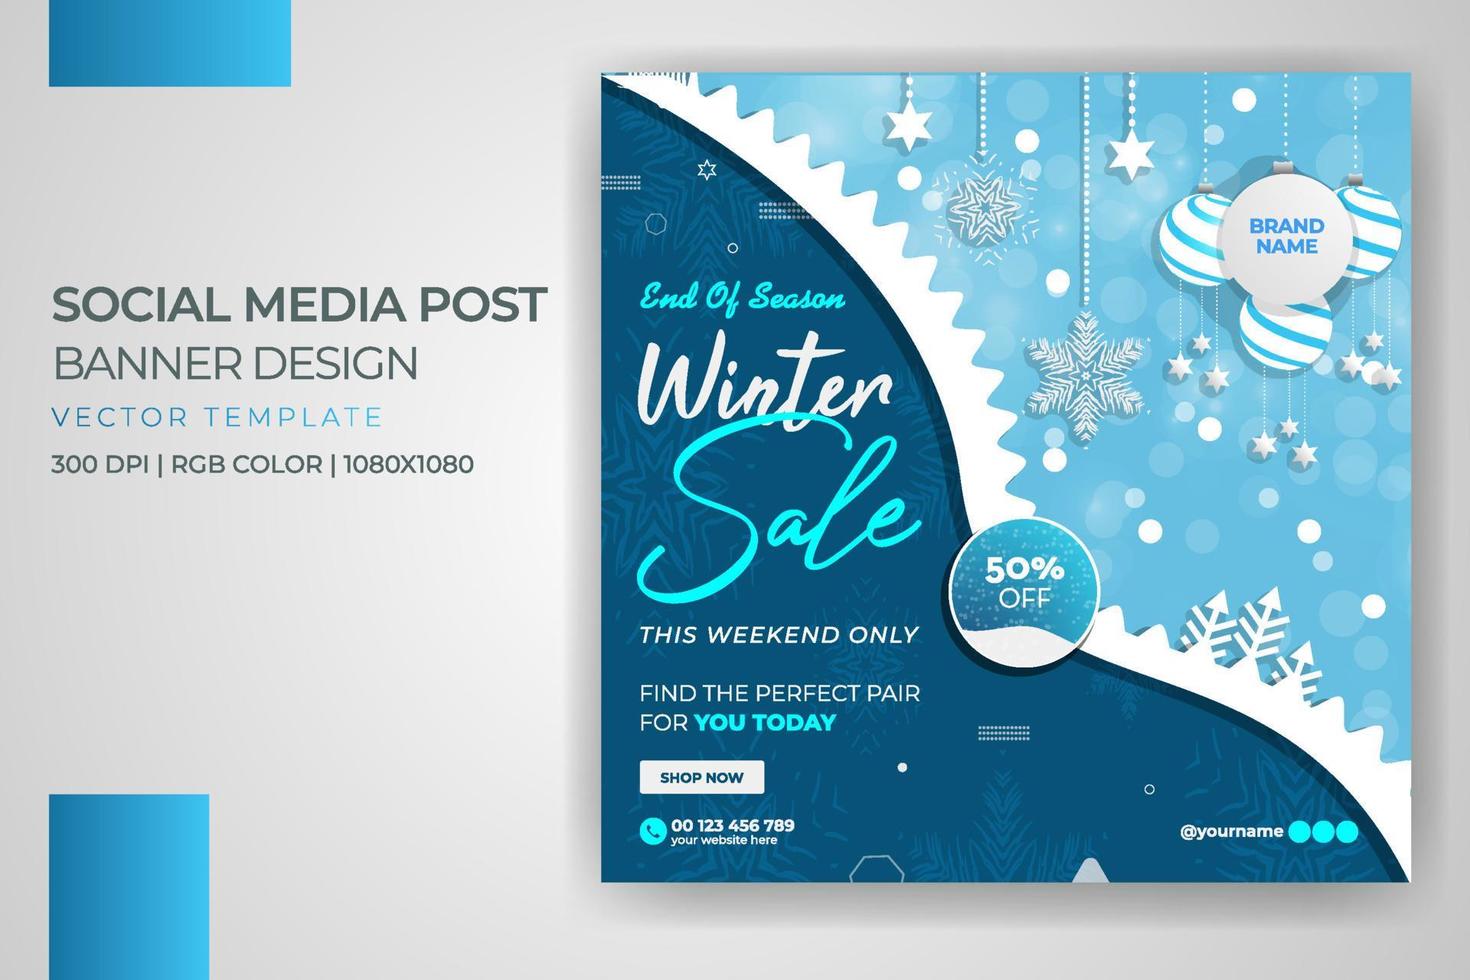 Winterschlussverkauf Angebot Rabatte dekorative Social Media Post Banner Vektor Vorlage Design